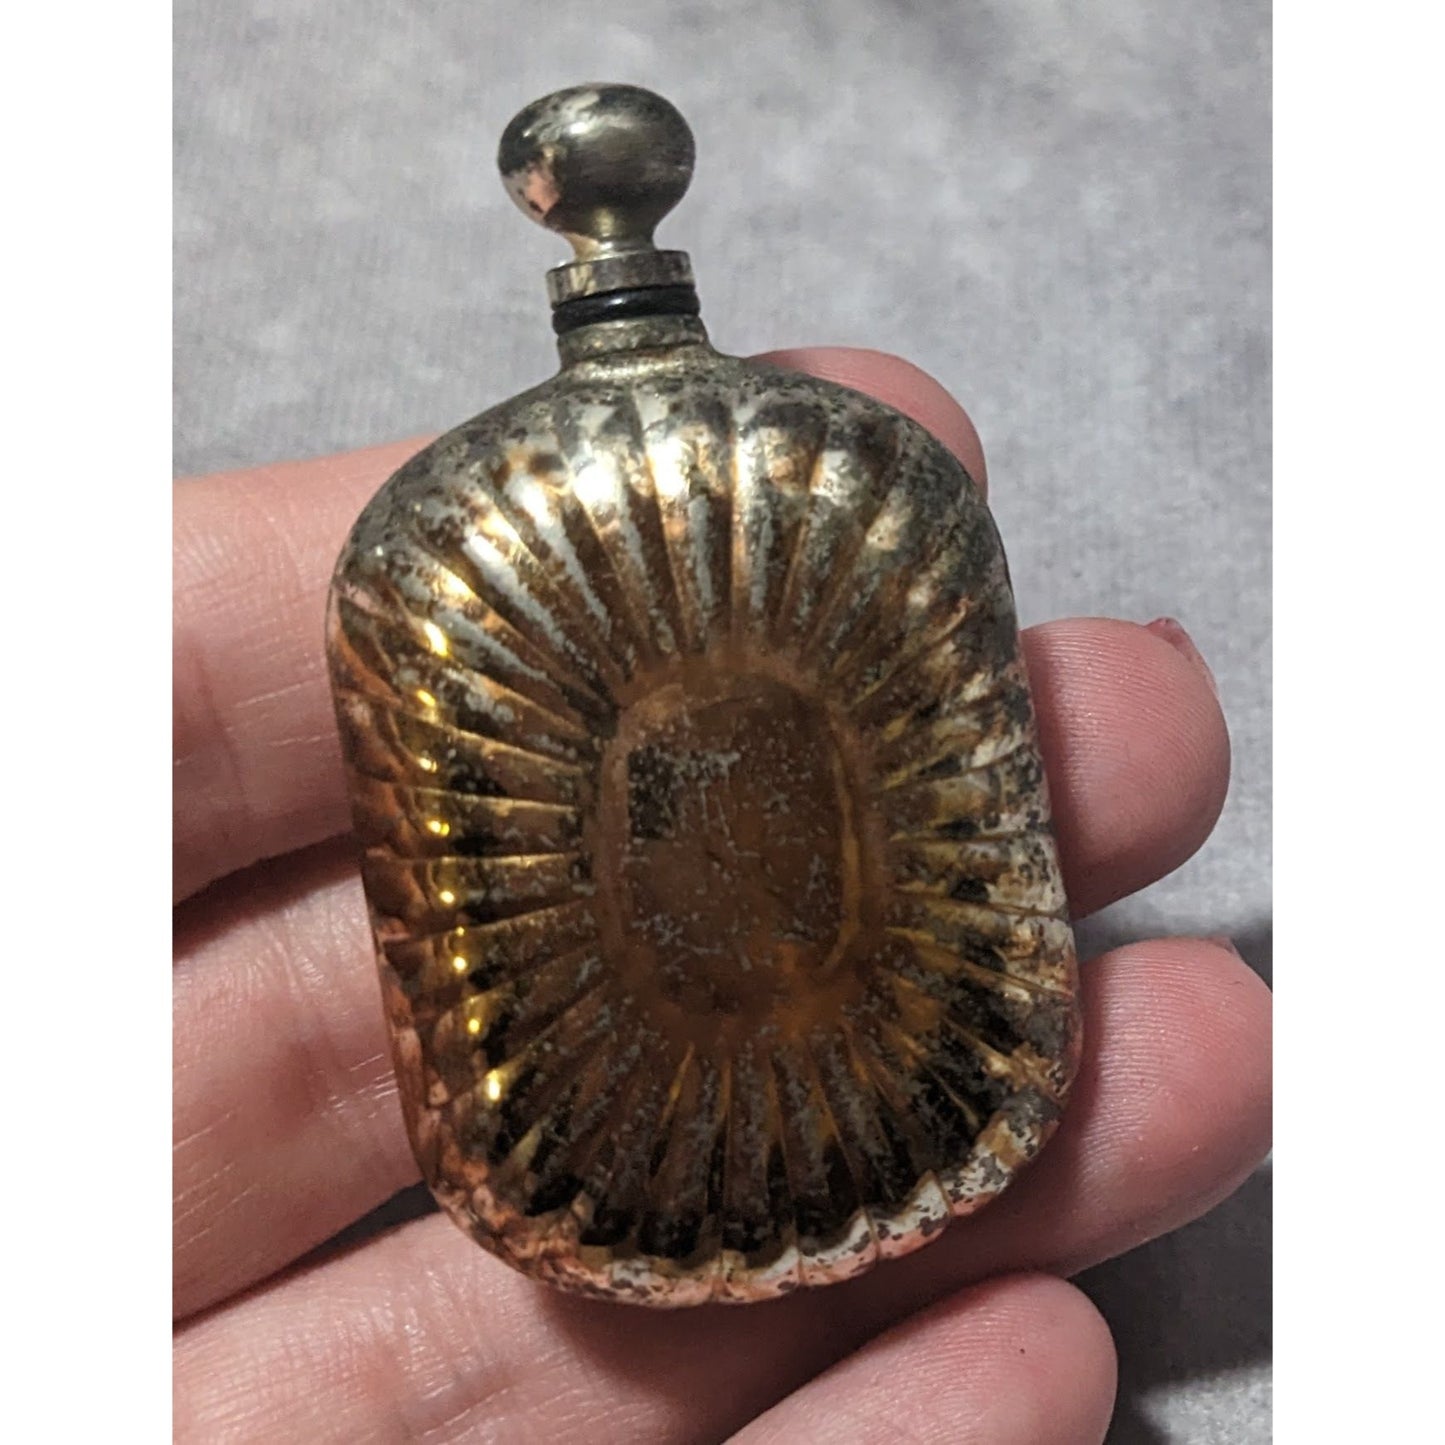 Vintage Pocket Perfume Bottle (Empty)